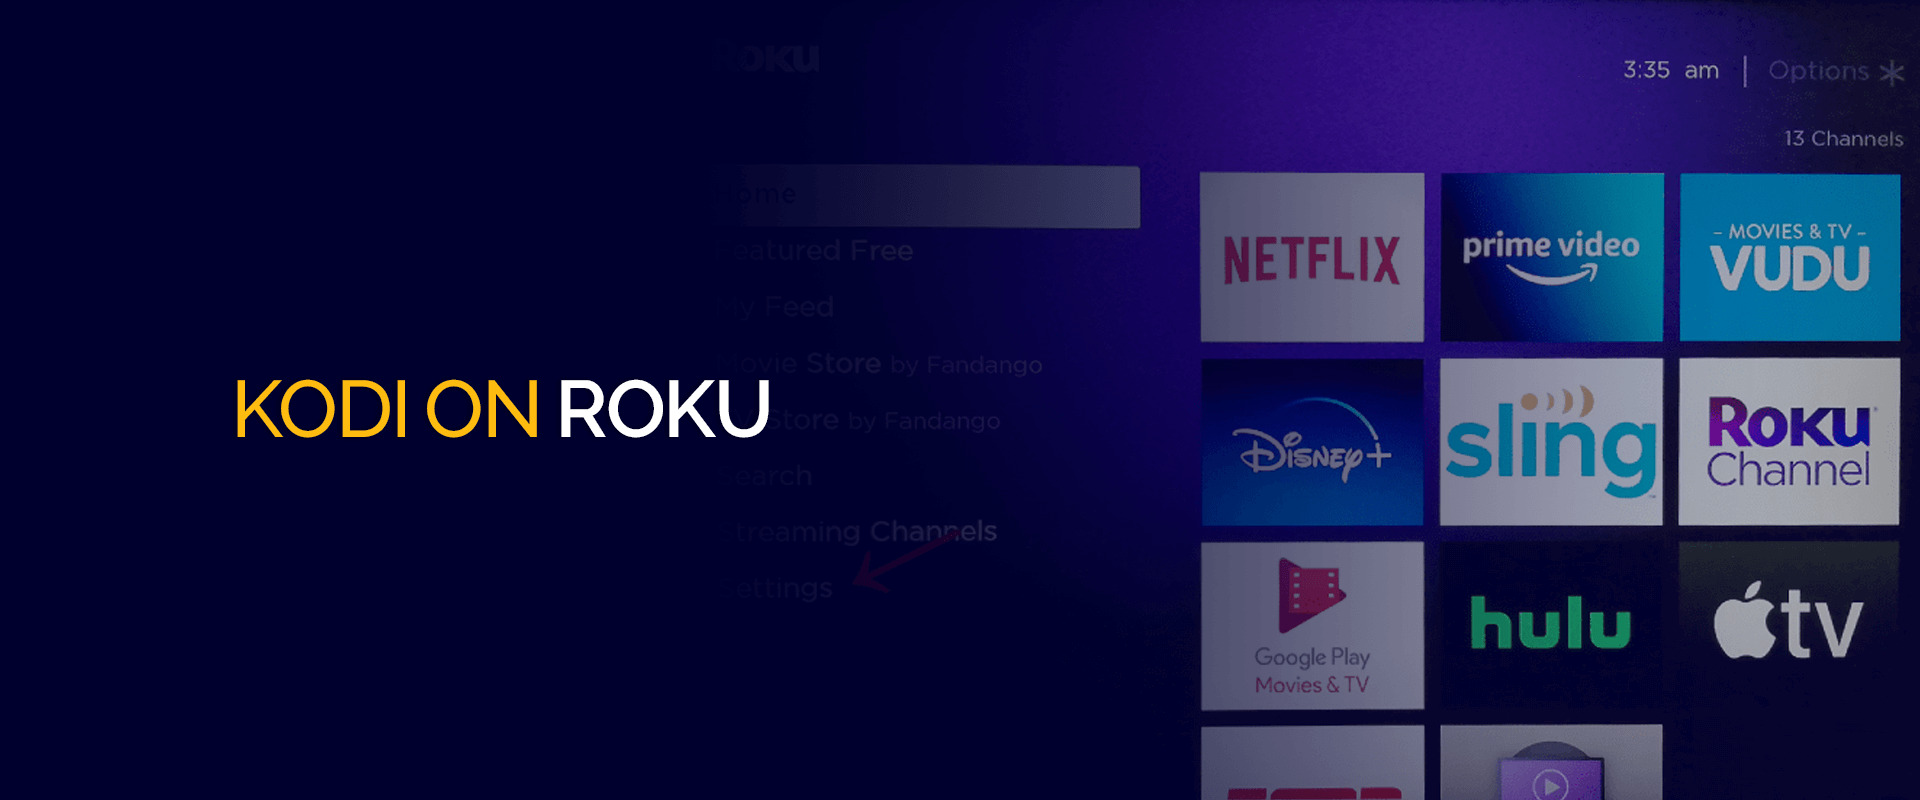 How To Download Kodi On Roku | Robots.net